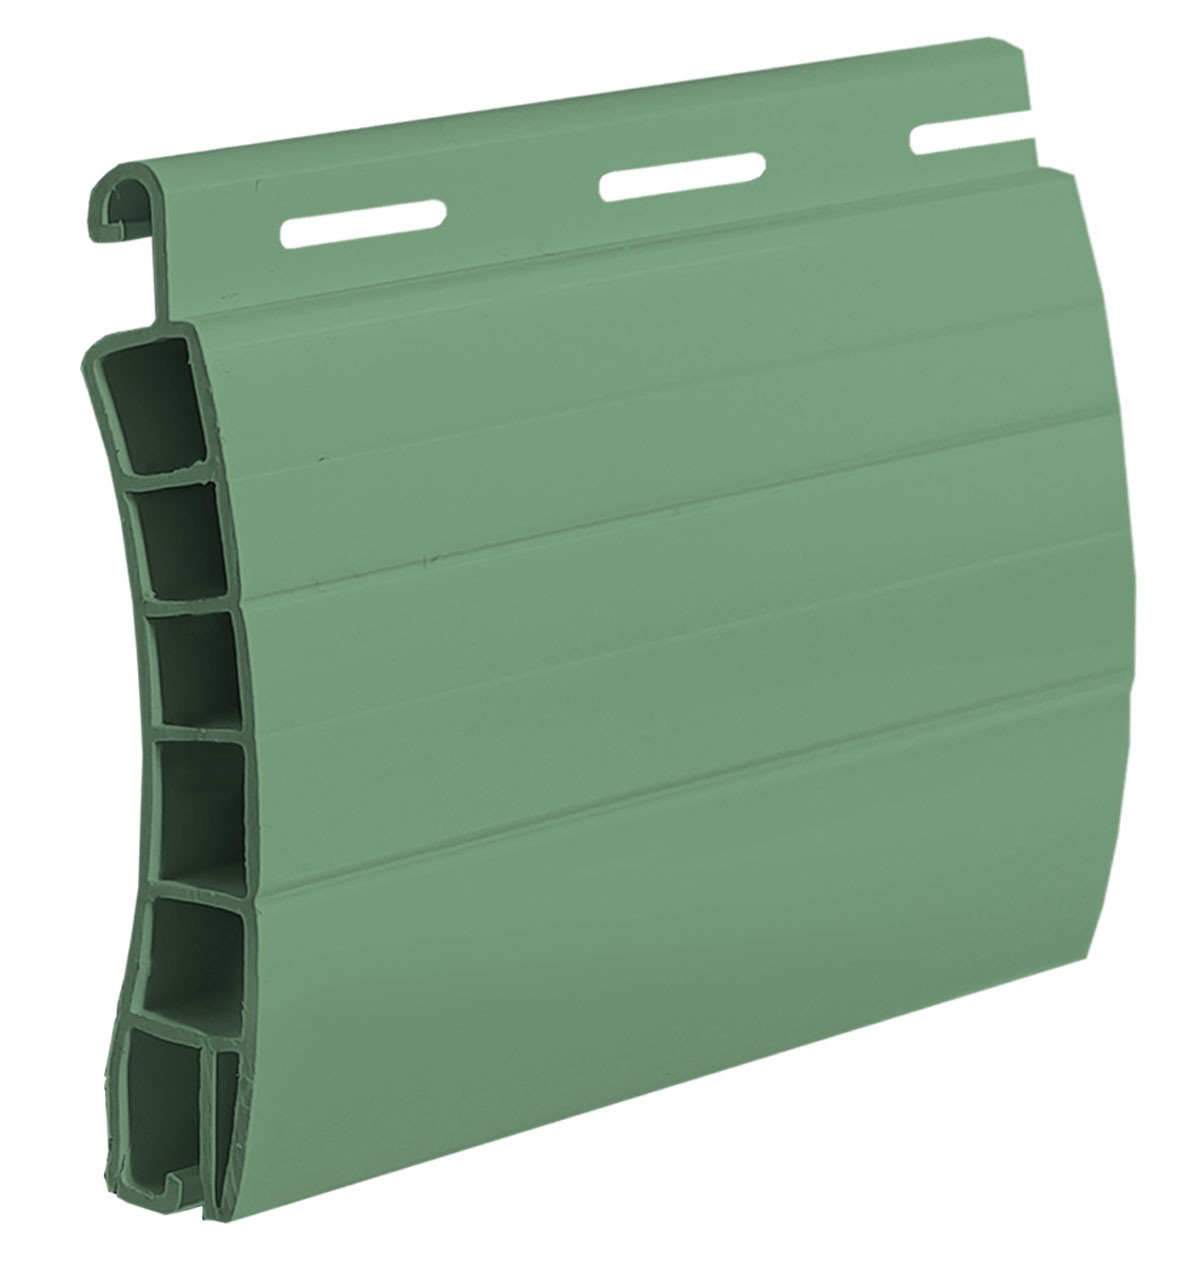  19 Verde Scuro - Avvolgibile PVC - FIBREGLASS